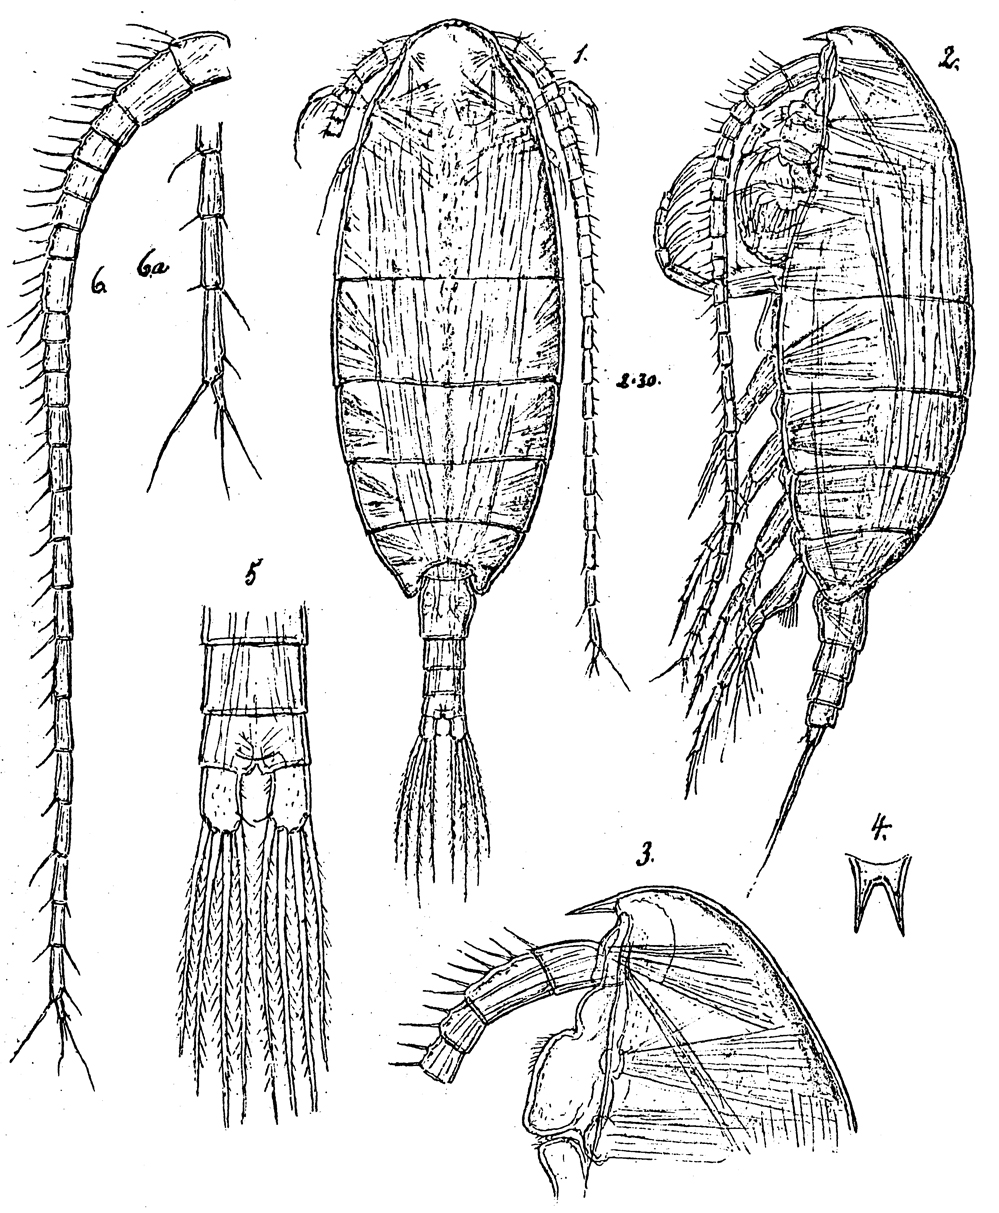 Species Monacilla typica - Plate 13 of morphological figures